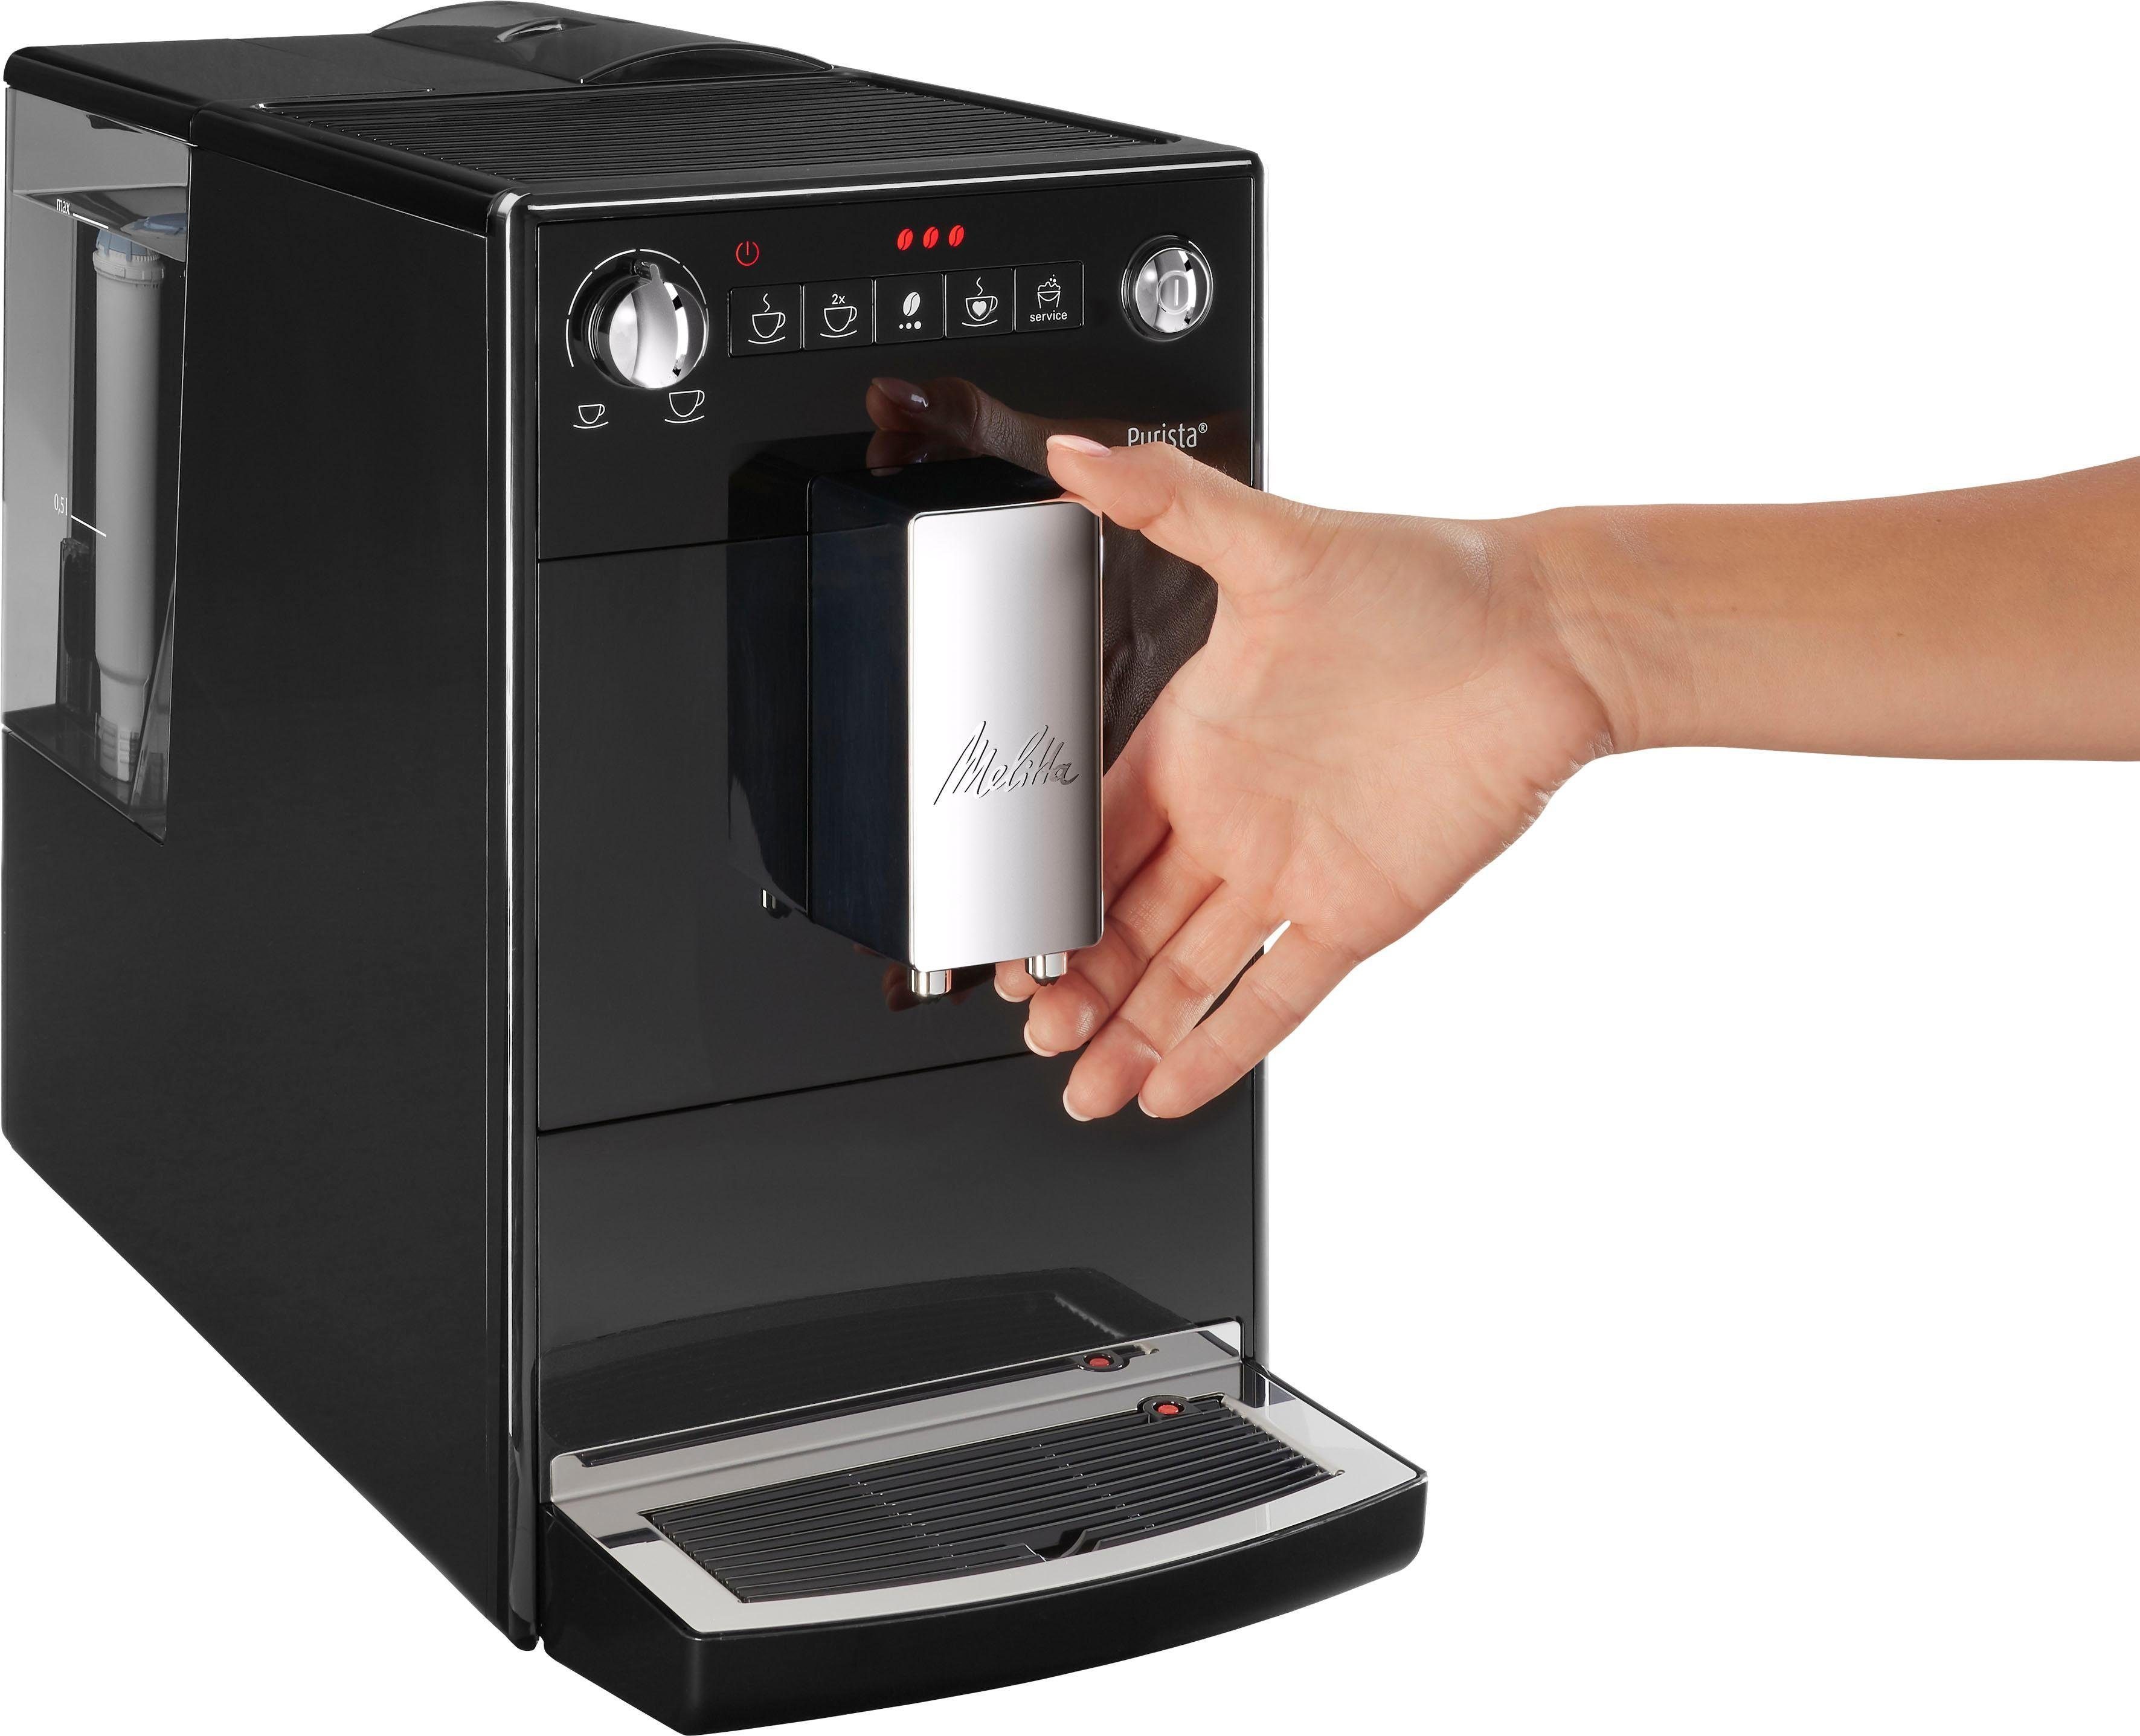 Melitta extra leise Kaffeevollautomat Purista® & kompakt schwarz, F230-102, Lieblingskaffee-Funktion,